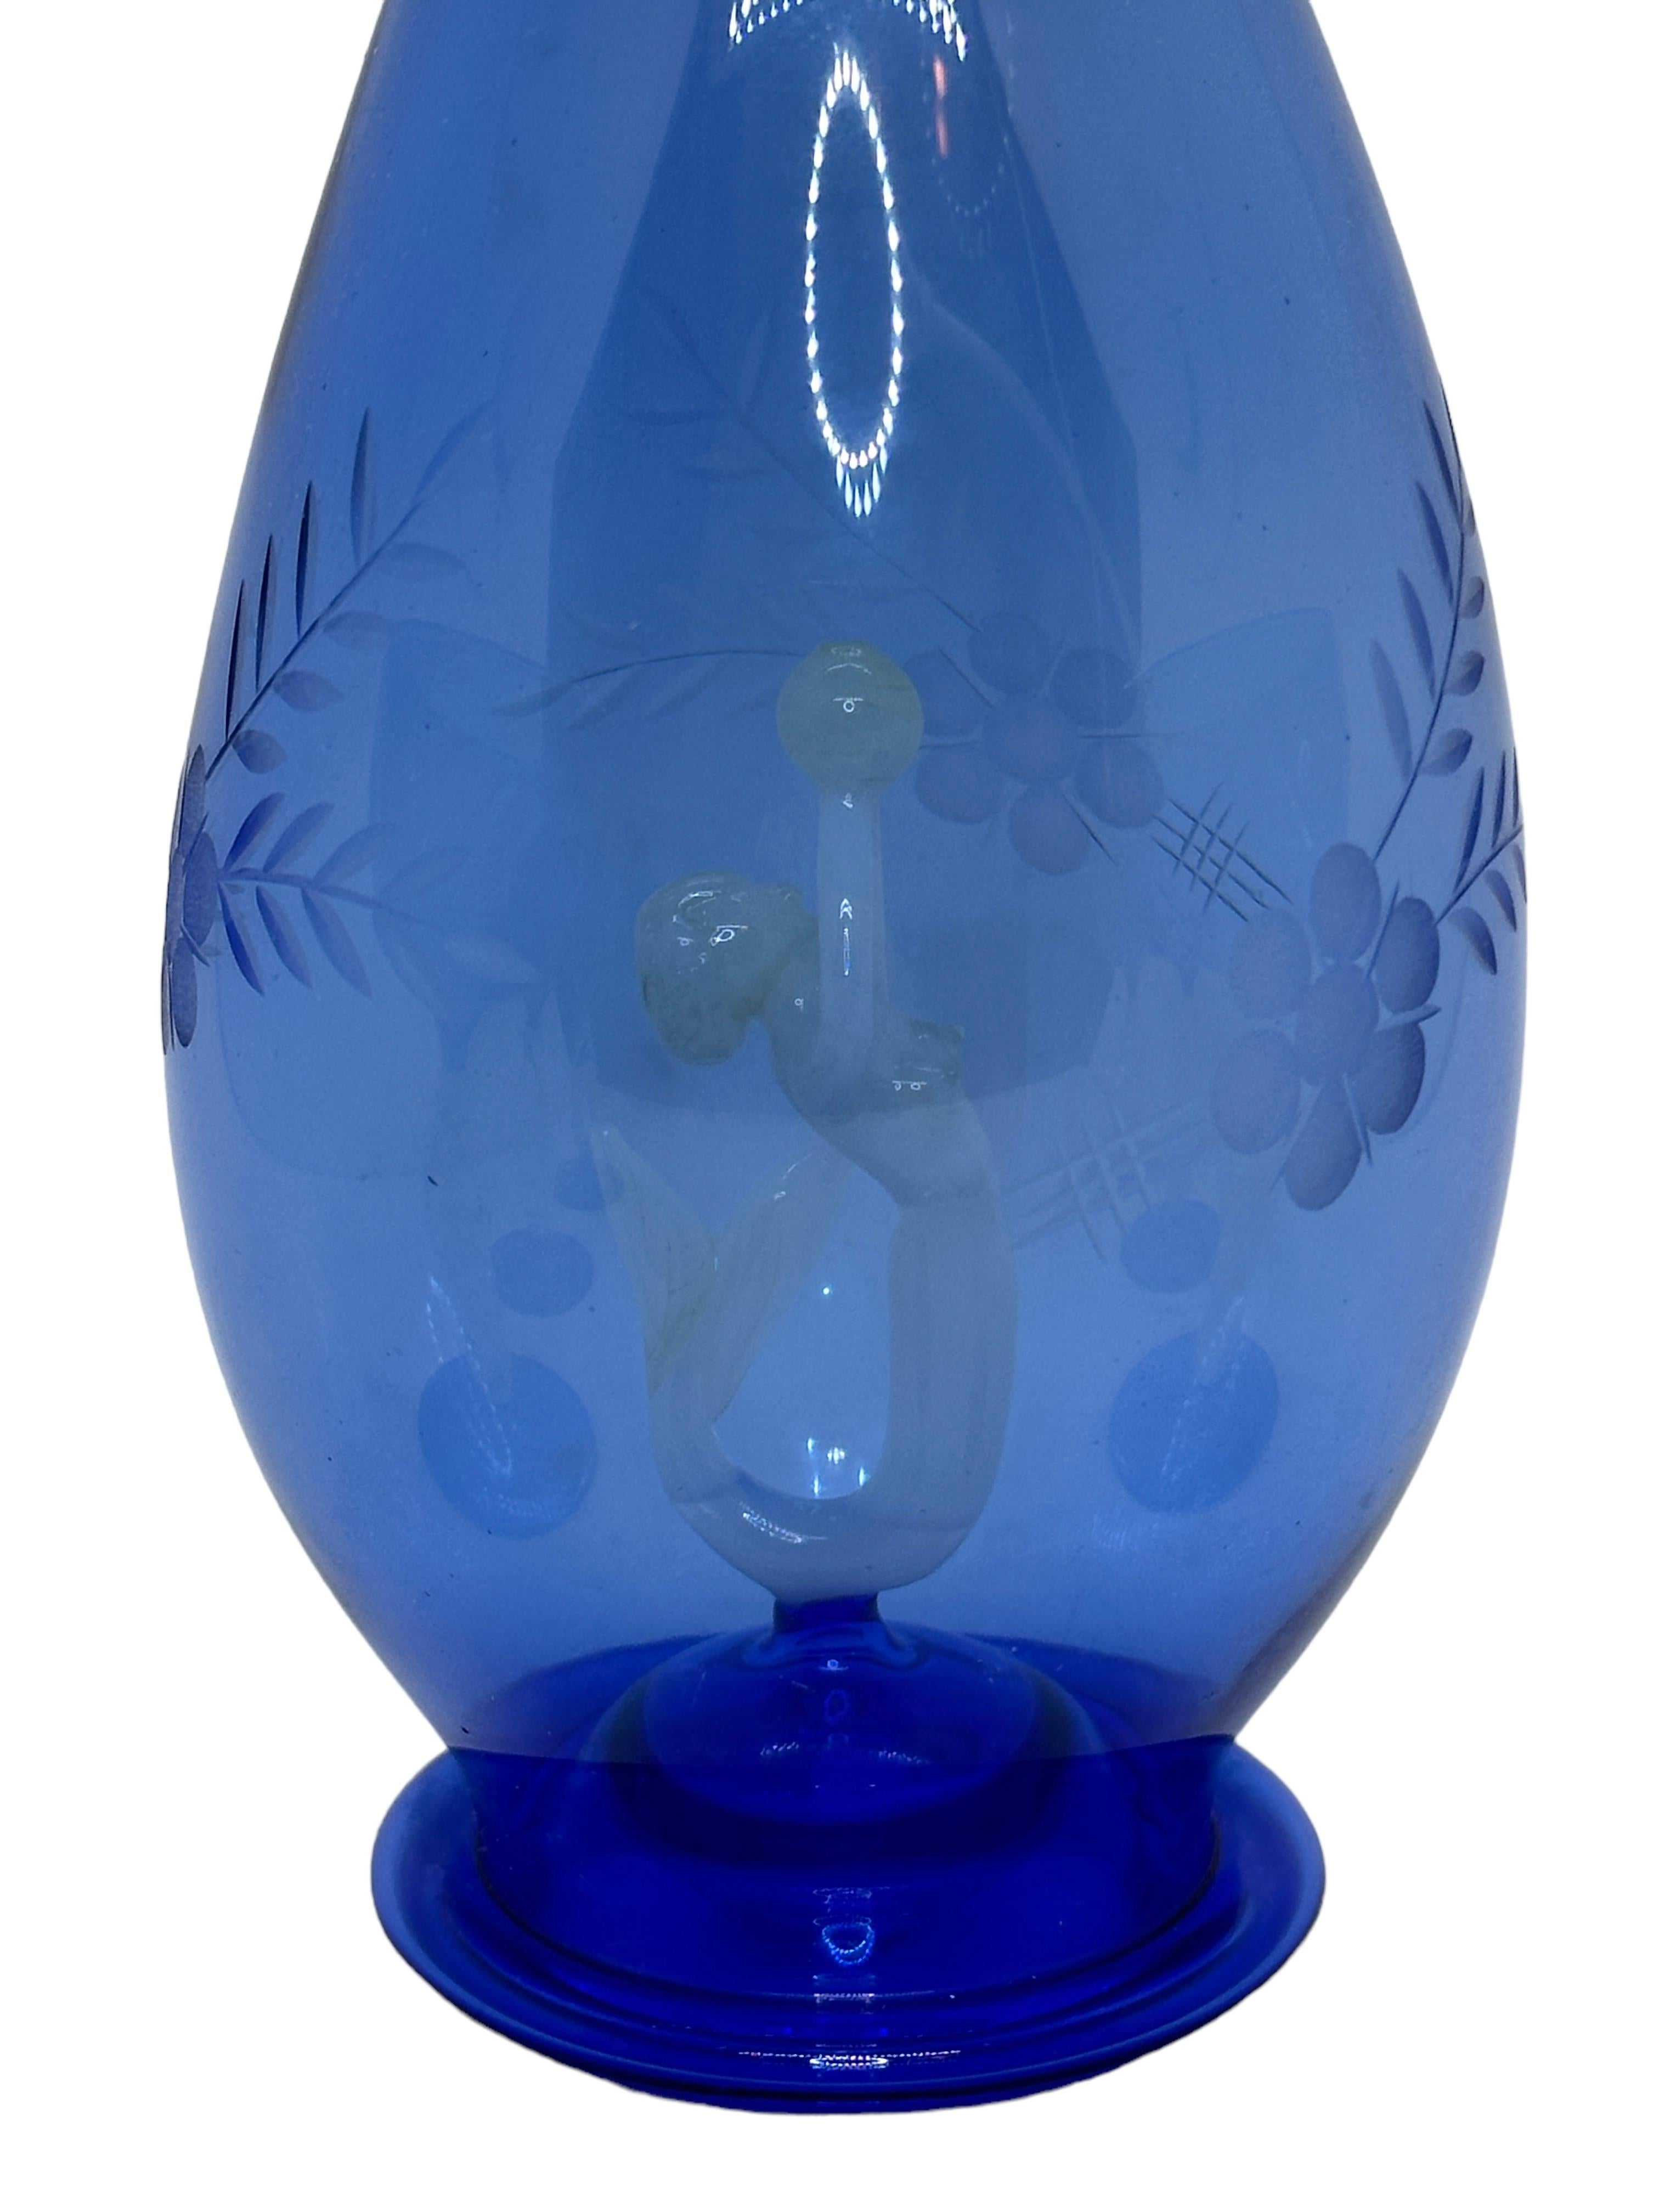 German Art Deco Blue Glass Mermaid Decanter & 6 Glasses Set by Bimini, Vintage Austria